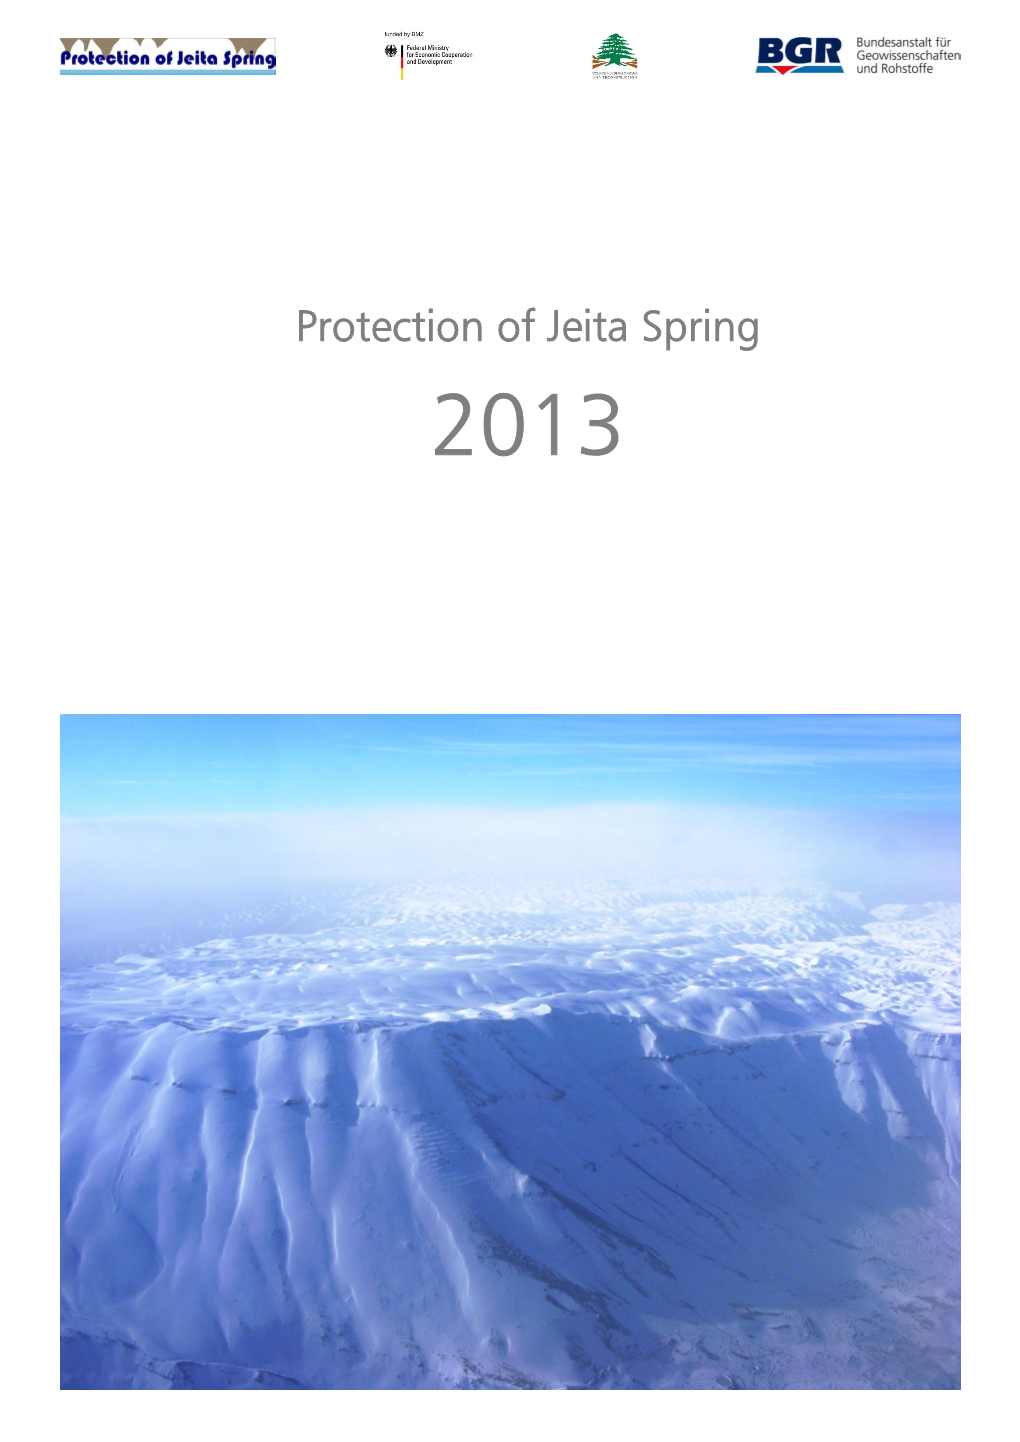 2013 Calendar "Protection of Jeita Spring"